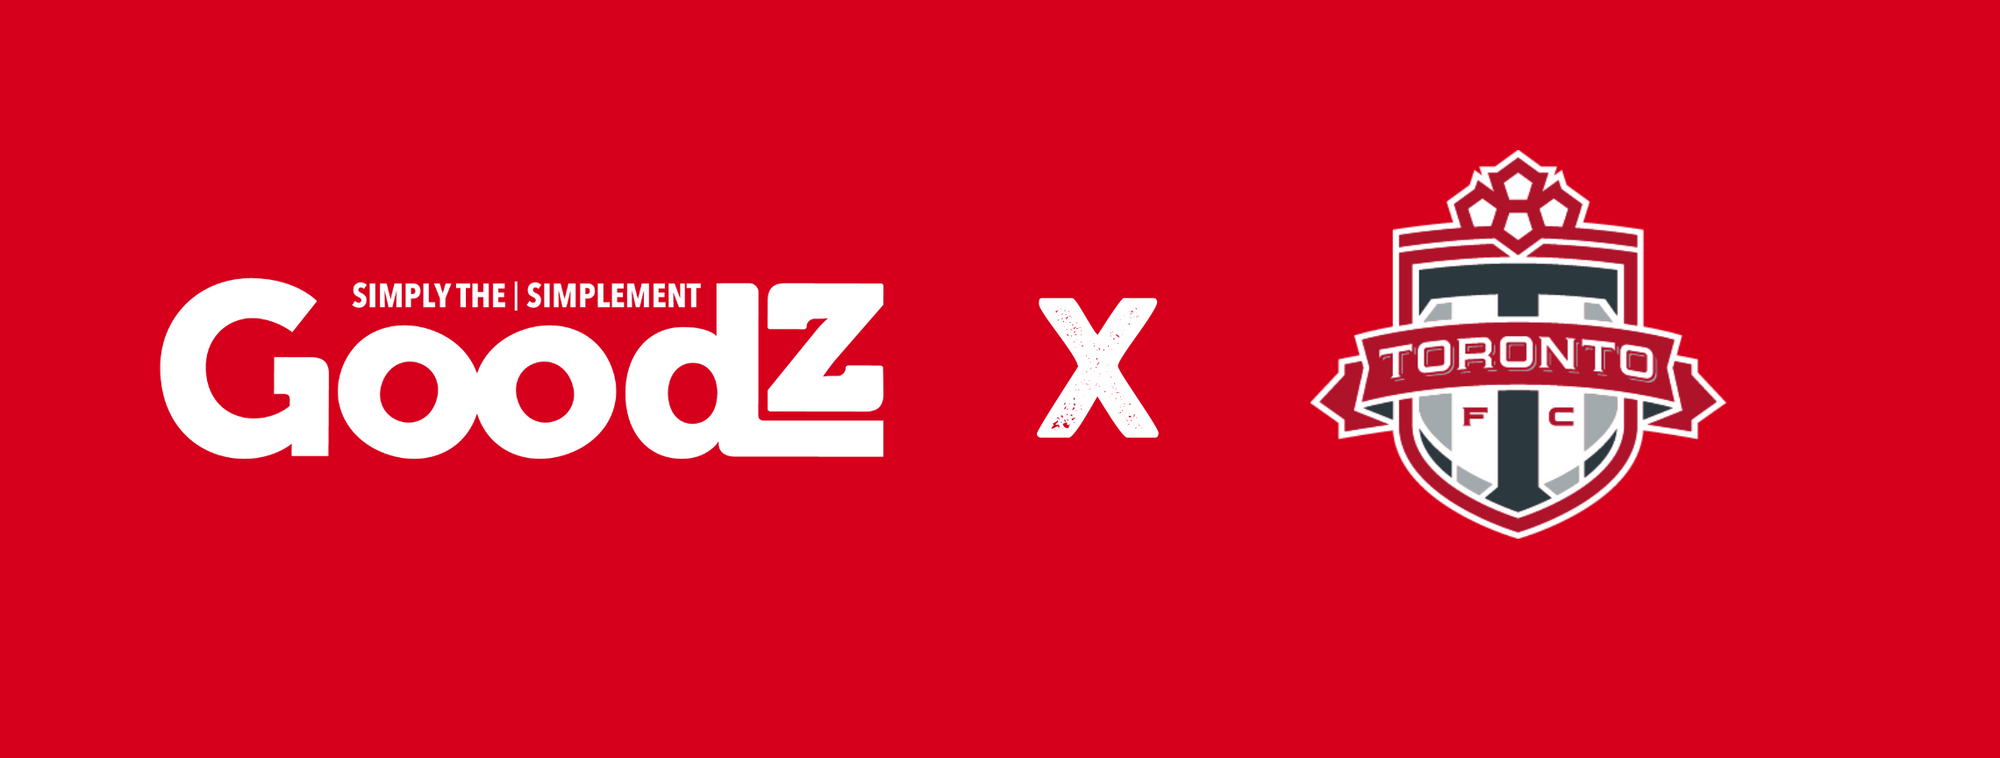 Simply the GOODZ x Toronto FC - New Partnership Announcement